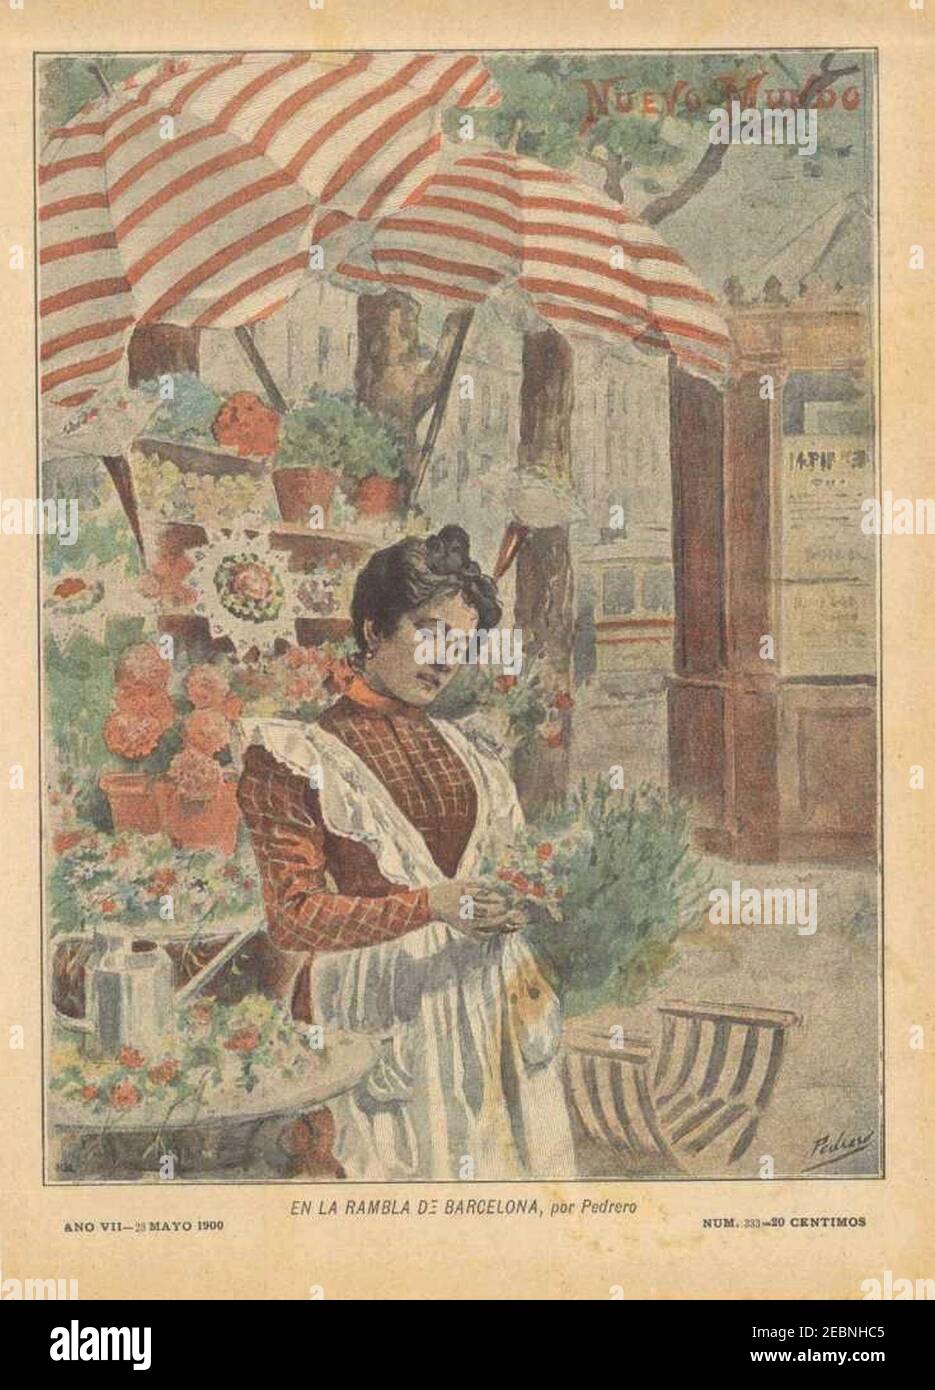 Nuevo Mundo, Rambla de Barcelona, May 23rd 1900, cover by Mariano Pedrero  Stock Photo - Alamy